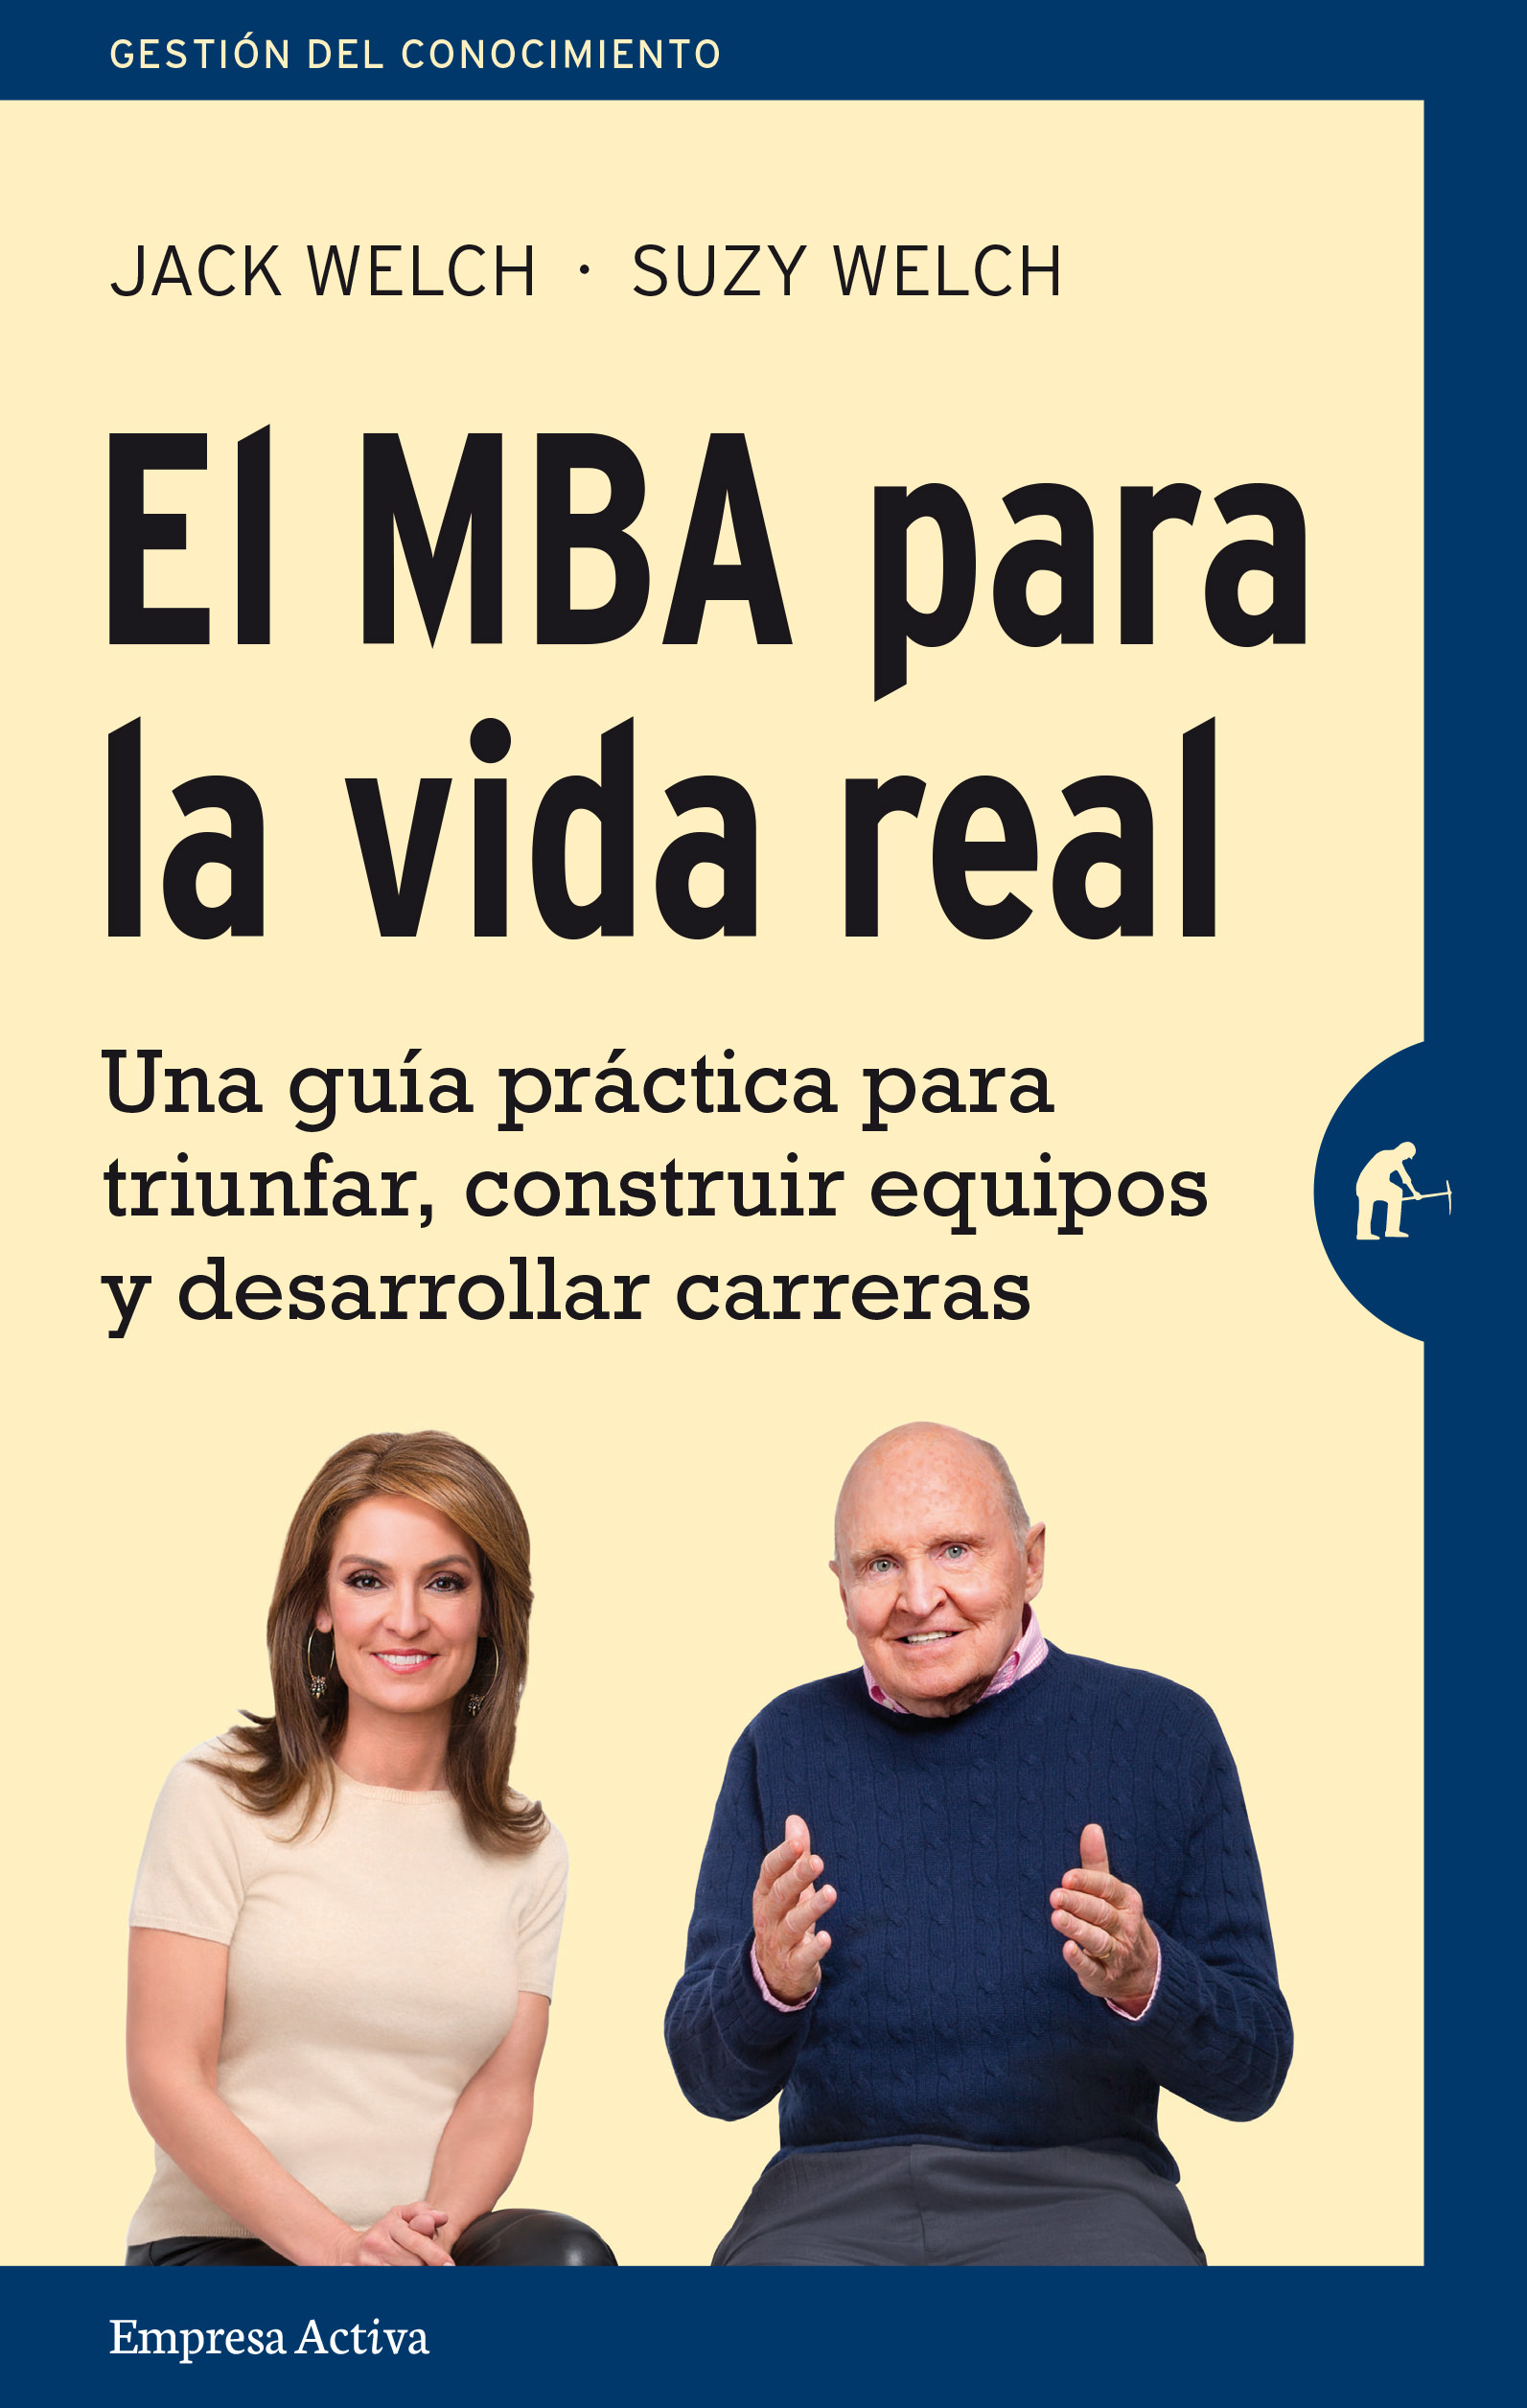 O MBA da Vida Real(Portuguese version) Free Summary by Jack Welch e Suzy  Welch